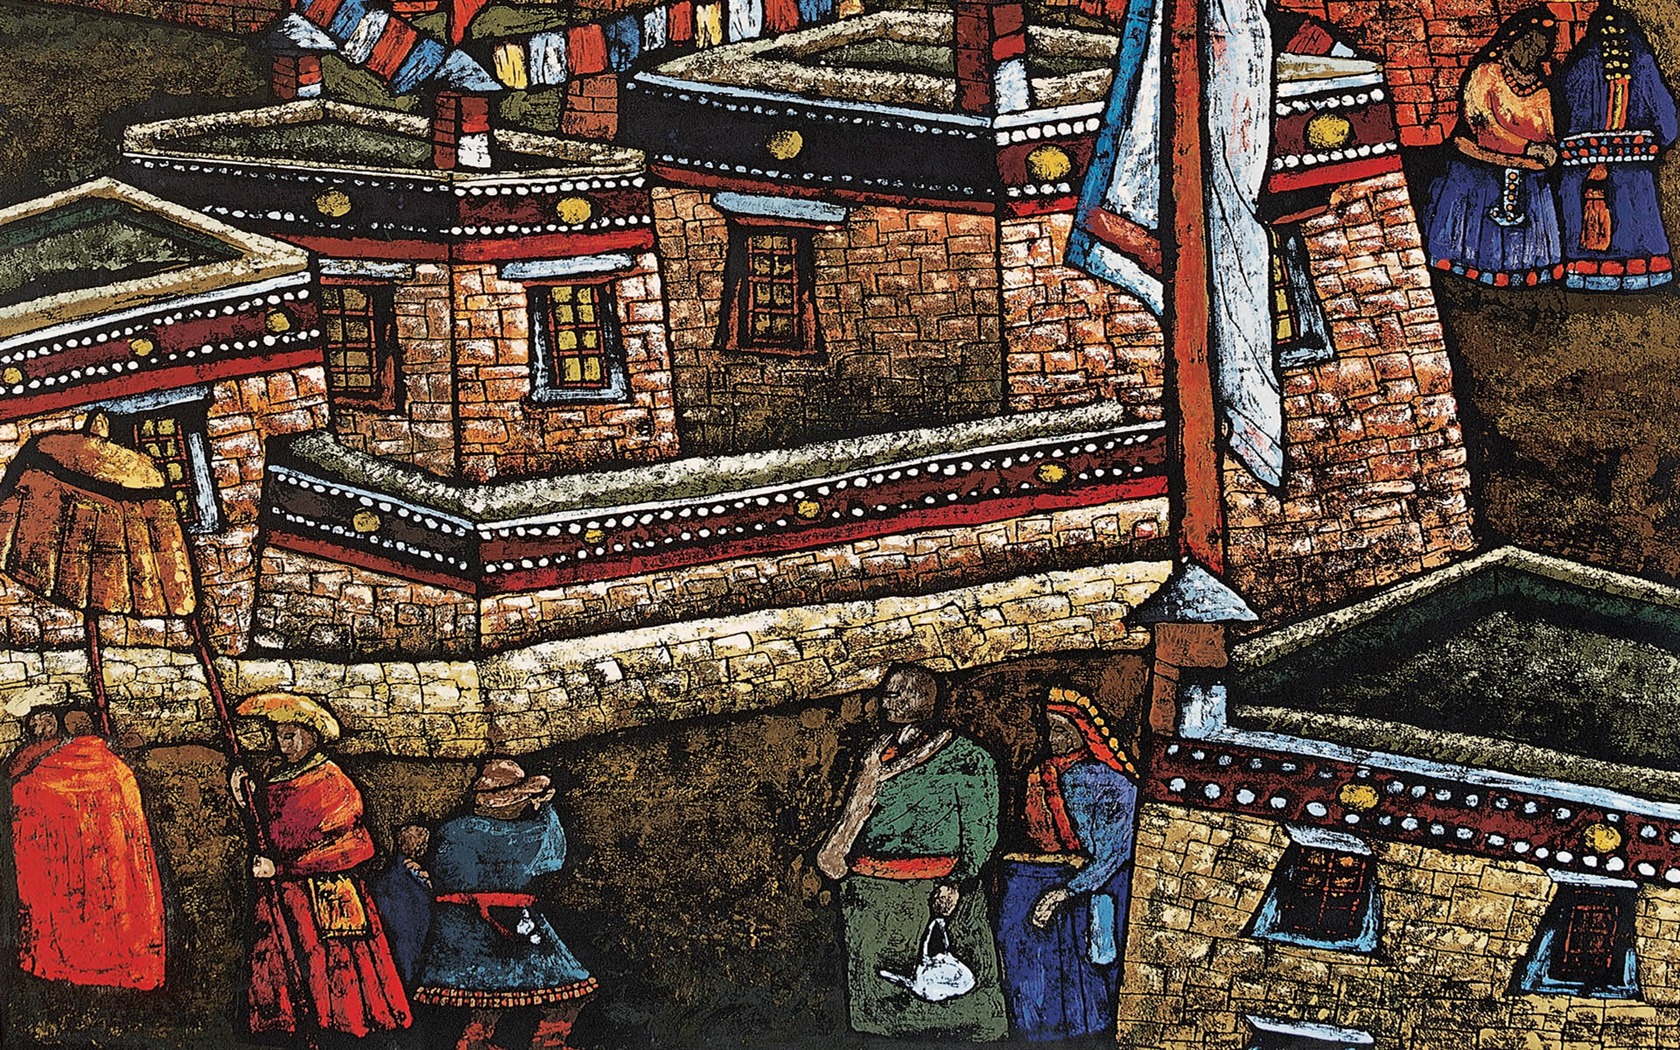 Cheung Pakistan fond d'écran d'impression du Tibet (1) #19 - 1680x1050